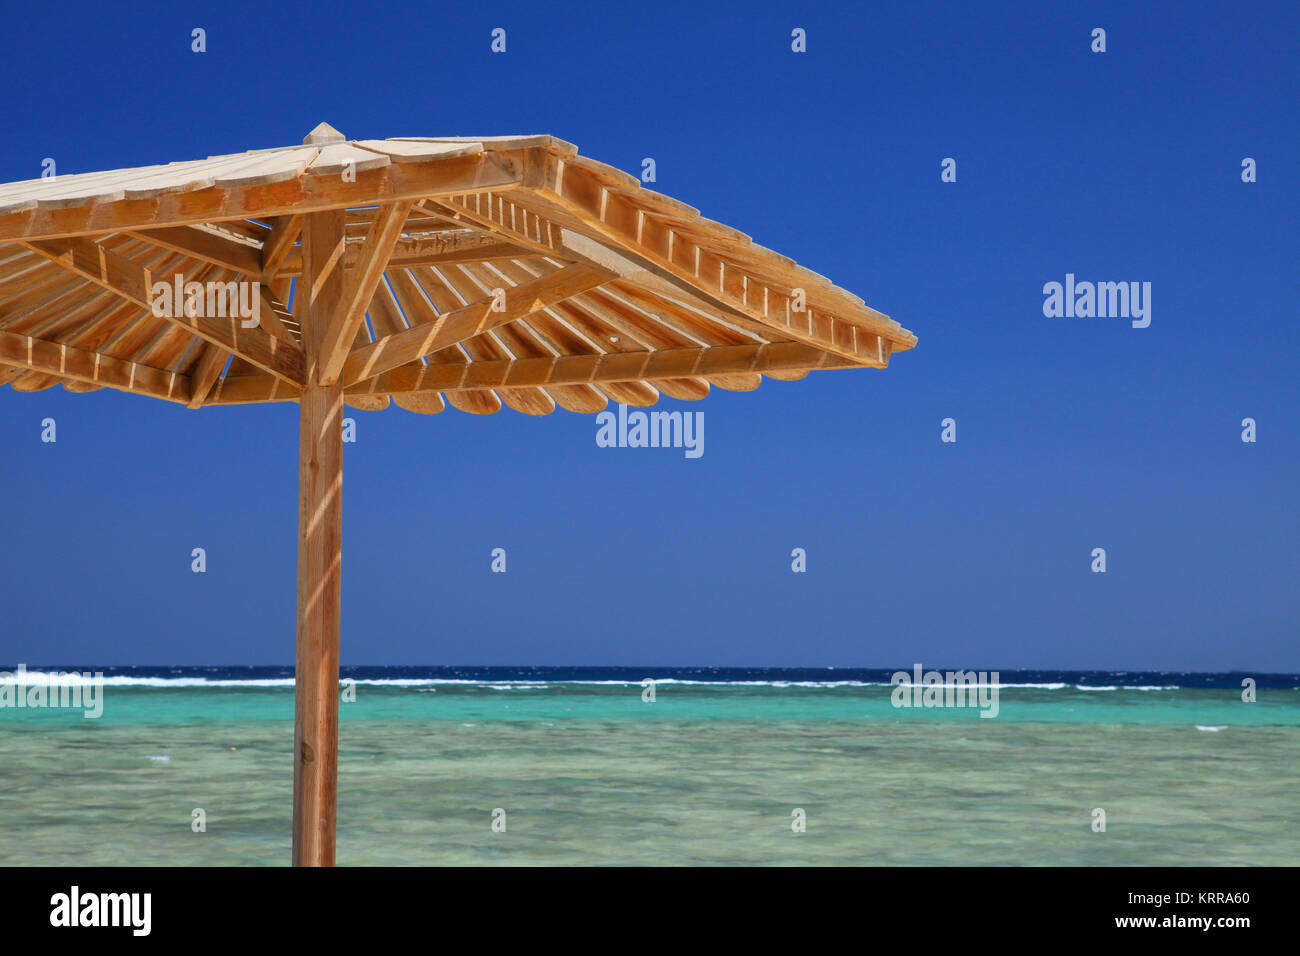 Egyptian parasol on the beach of Red Sea. Marsa Alam, Egypt. Stock Photo